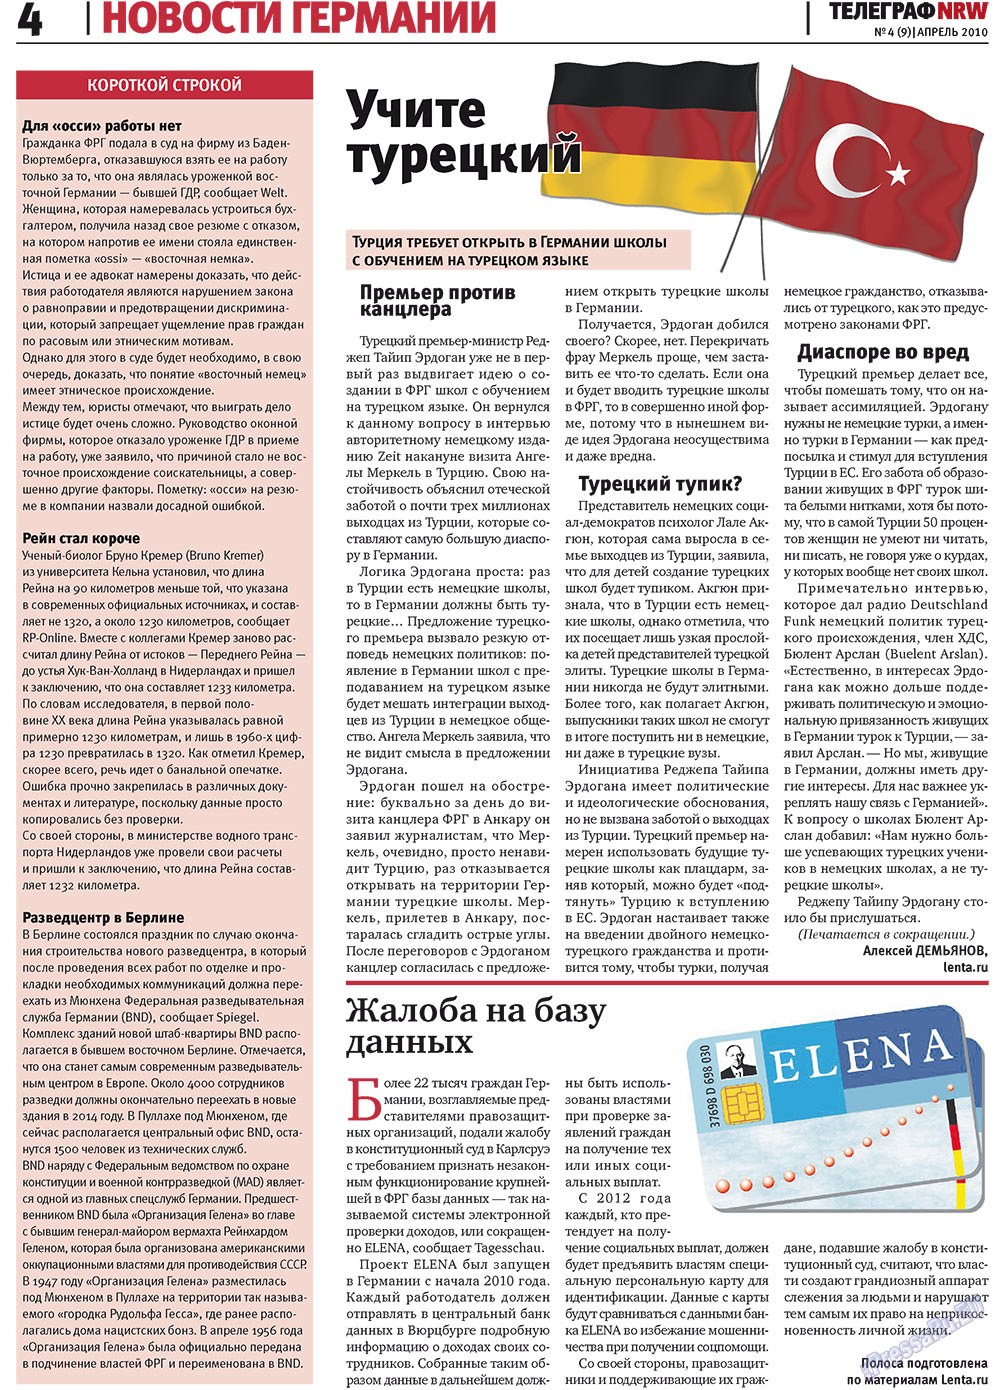 Телеграф NRW, газета. 2010 №4 стр.4